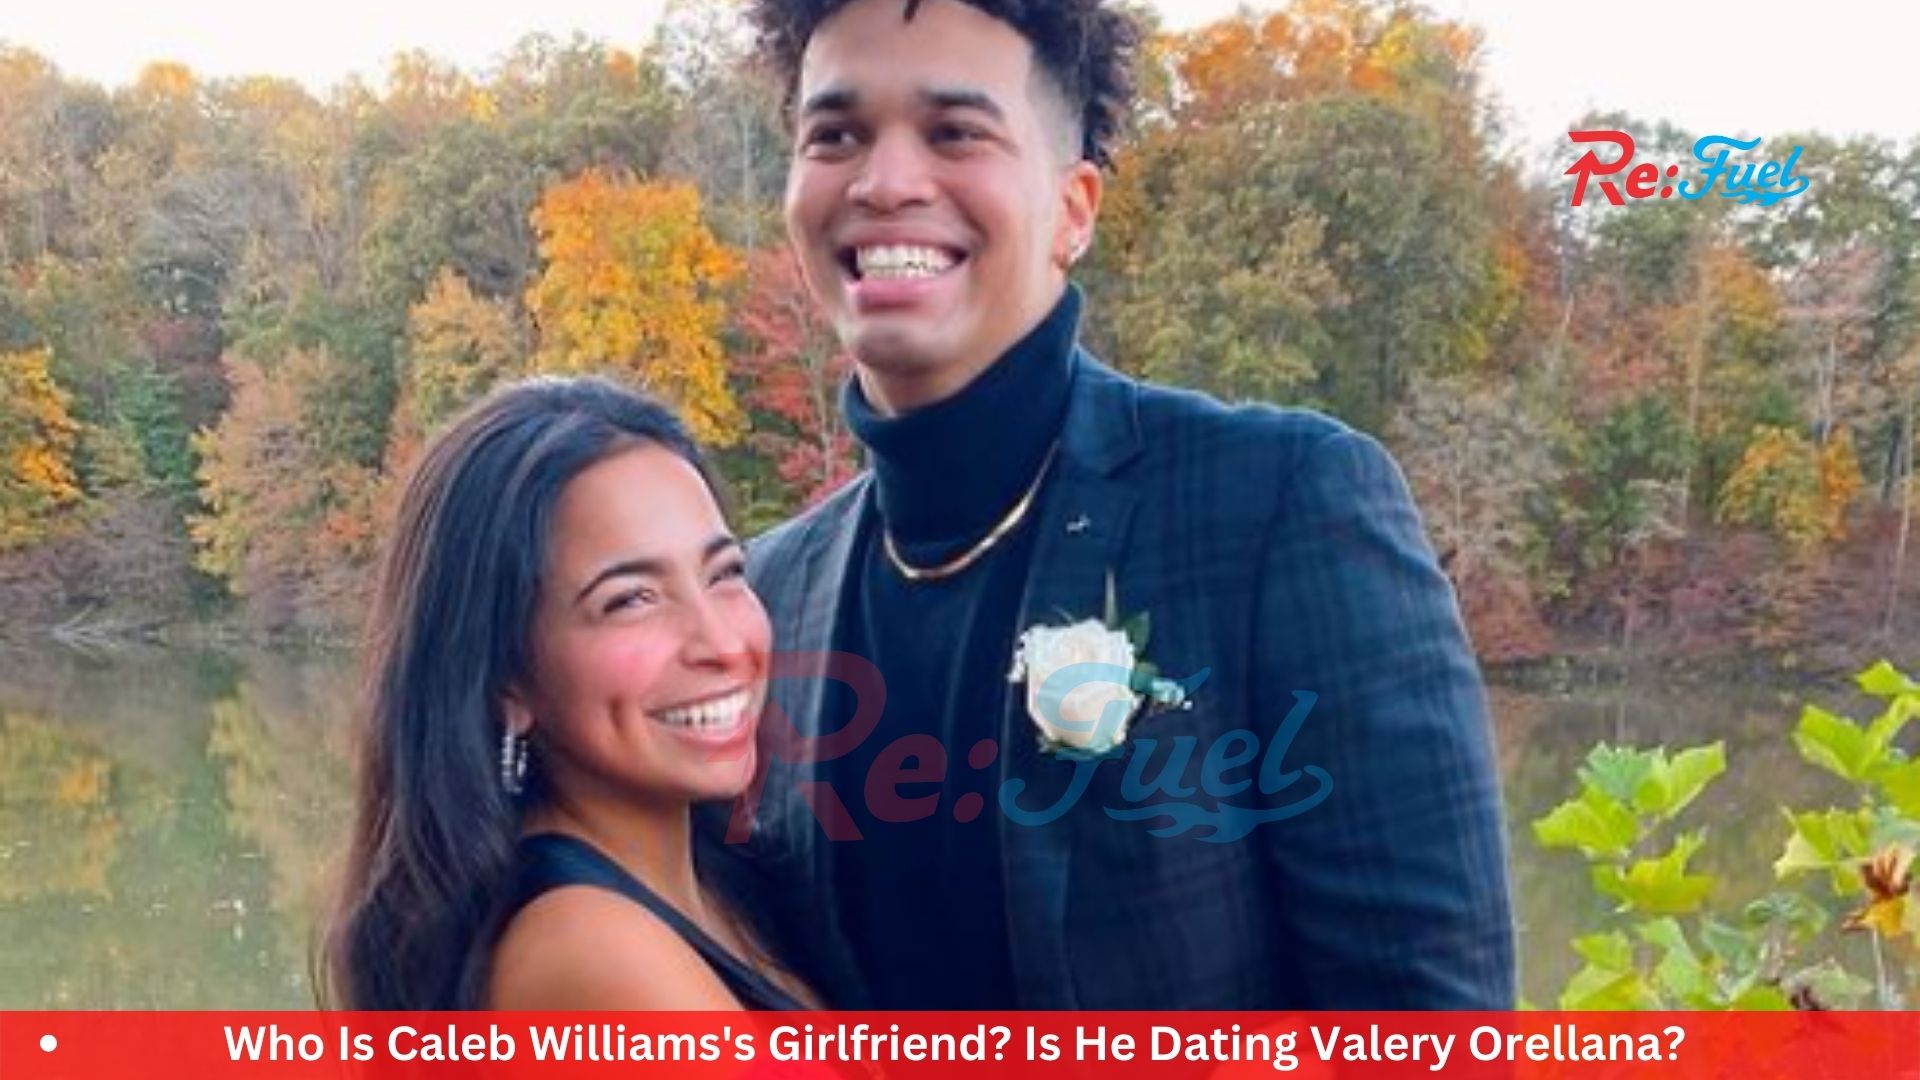 Who Is Caleb Williams's Girlfriend? Is He Dating Valery Orellana?